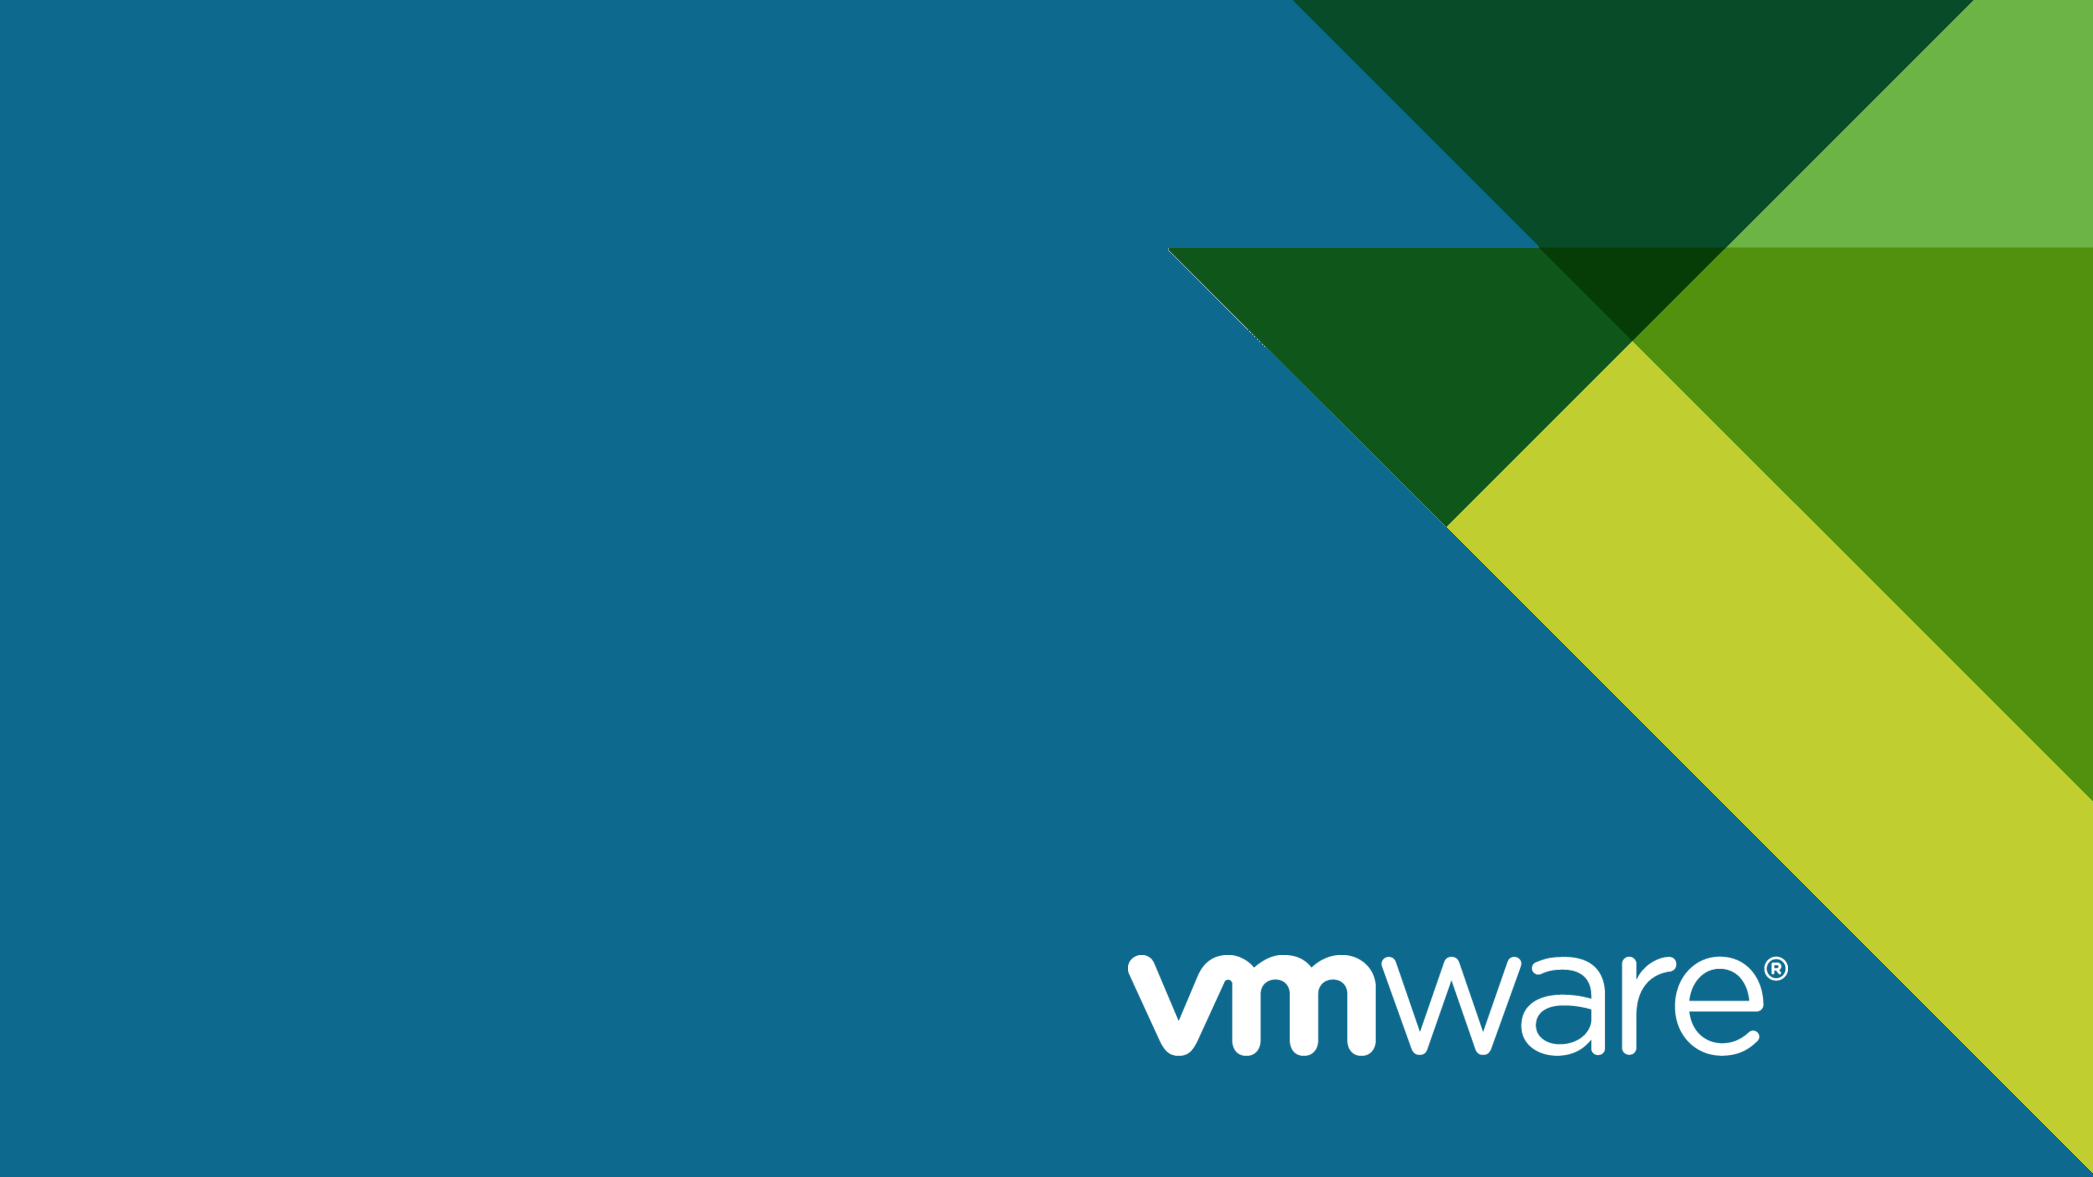 VMware Wallpaper Free VMware Background